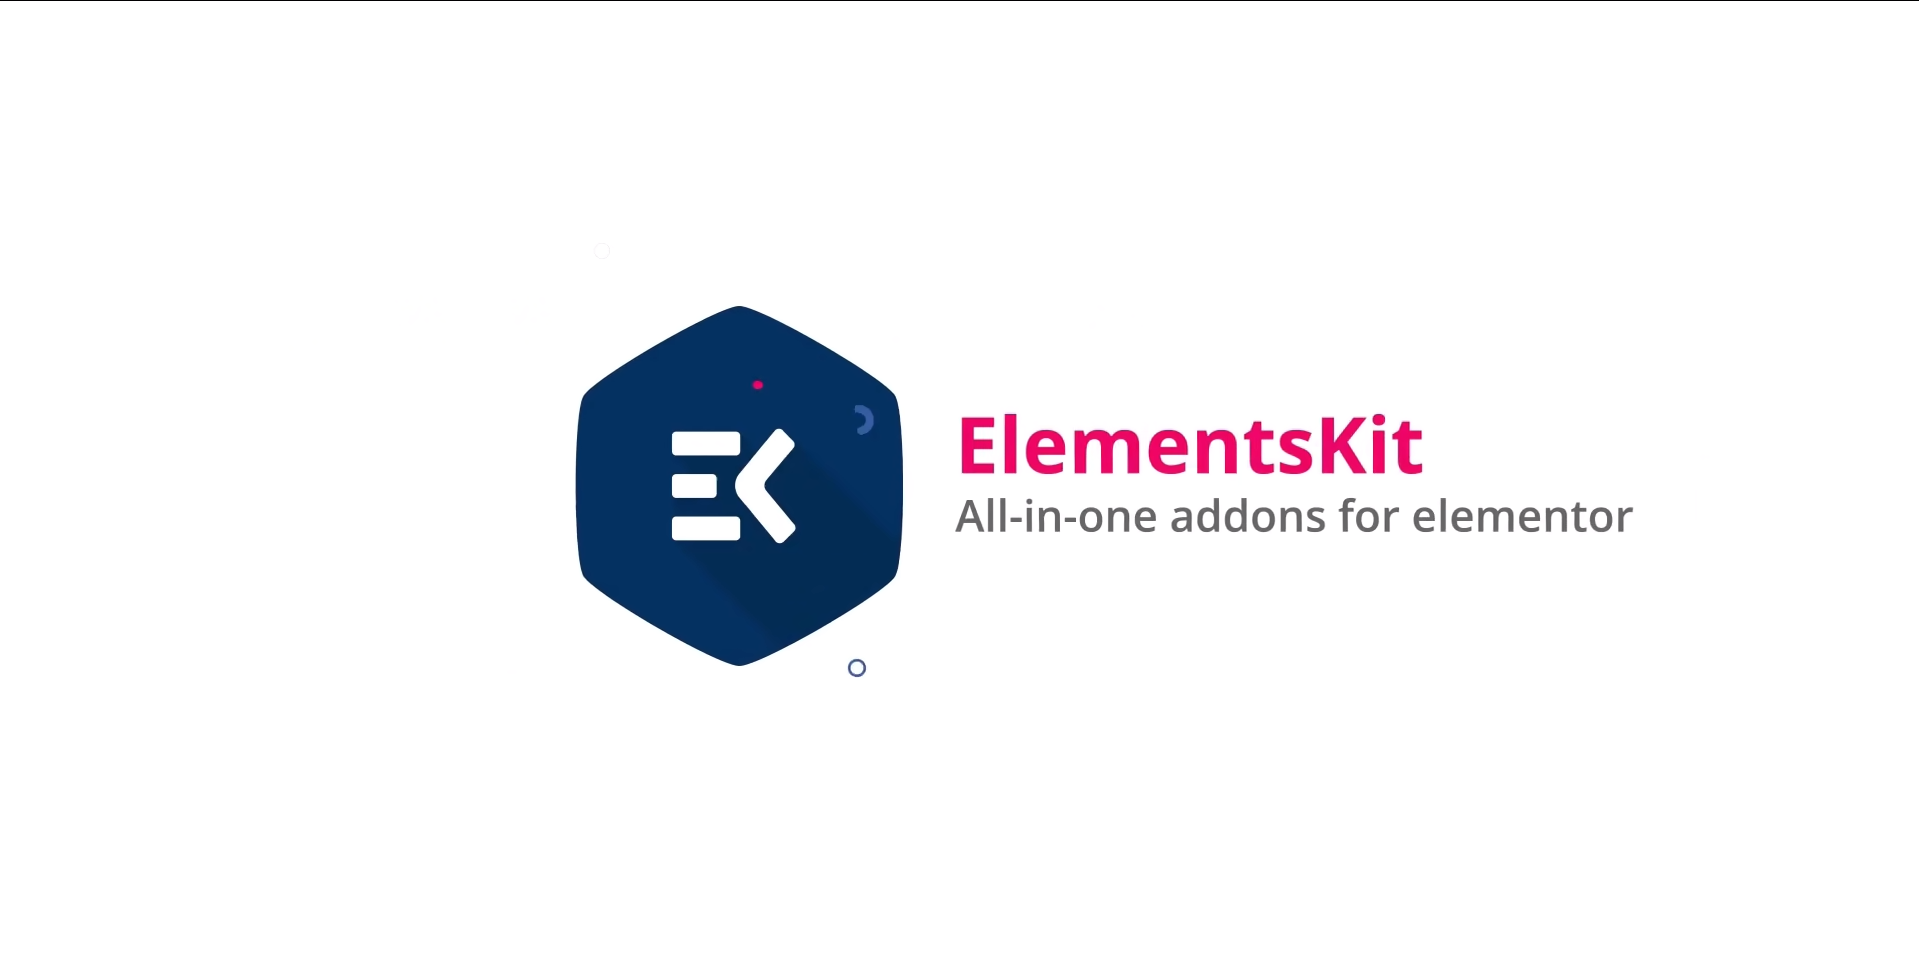 ElementsKit